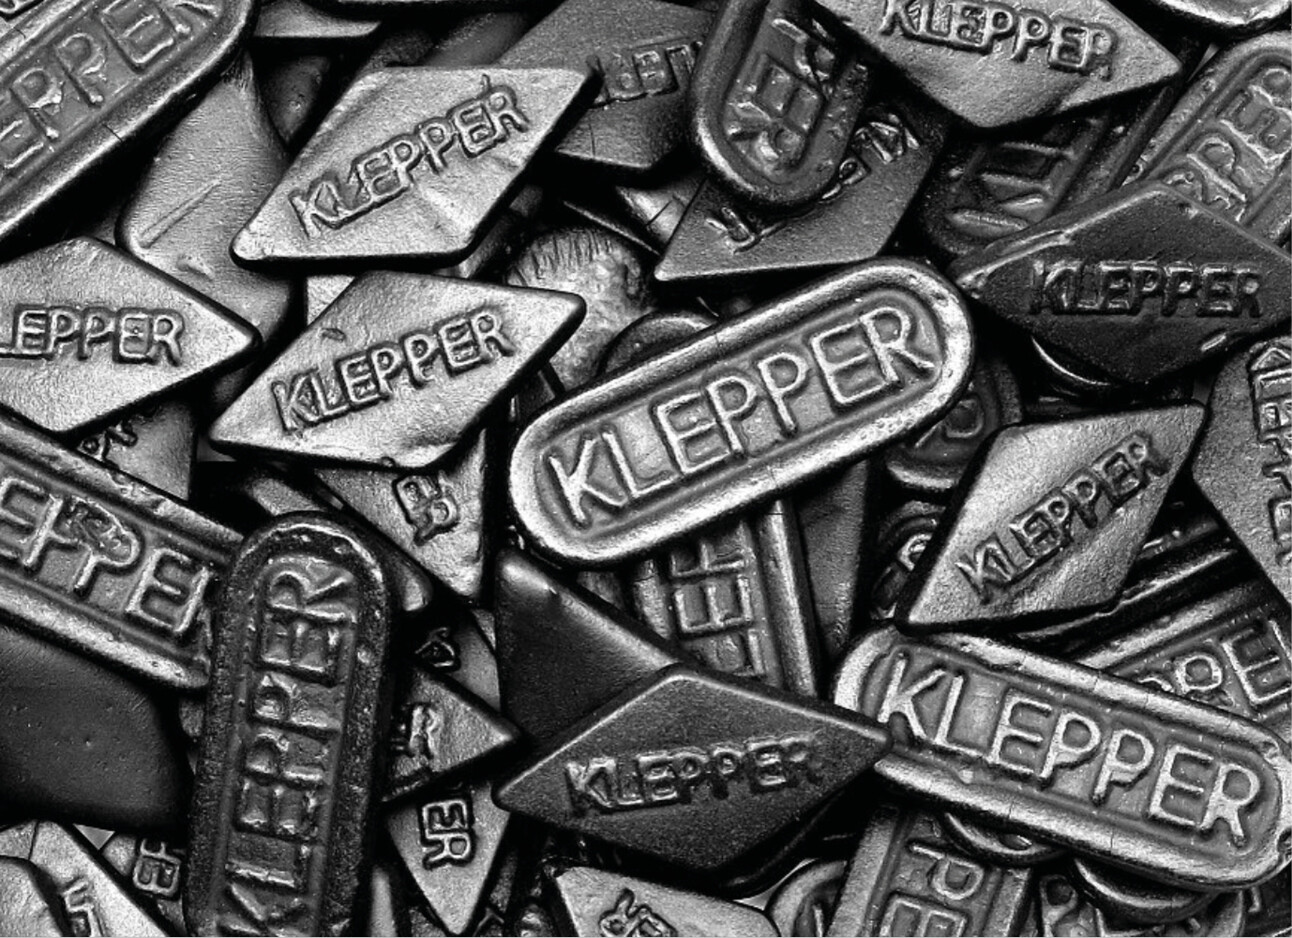 Klepper drop